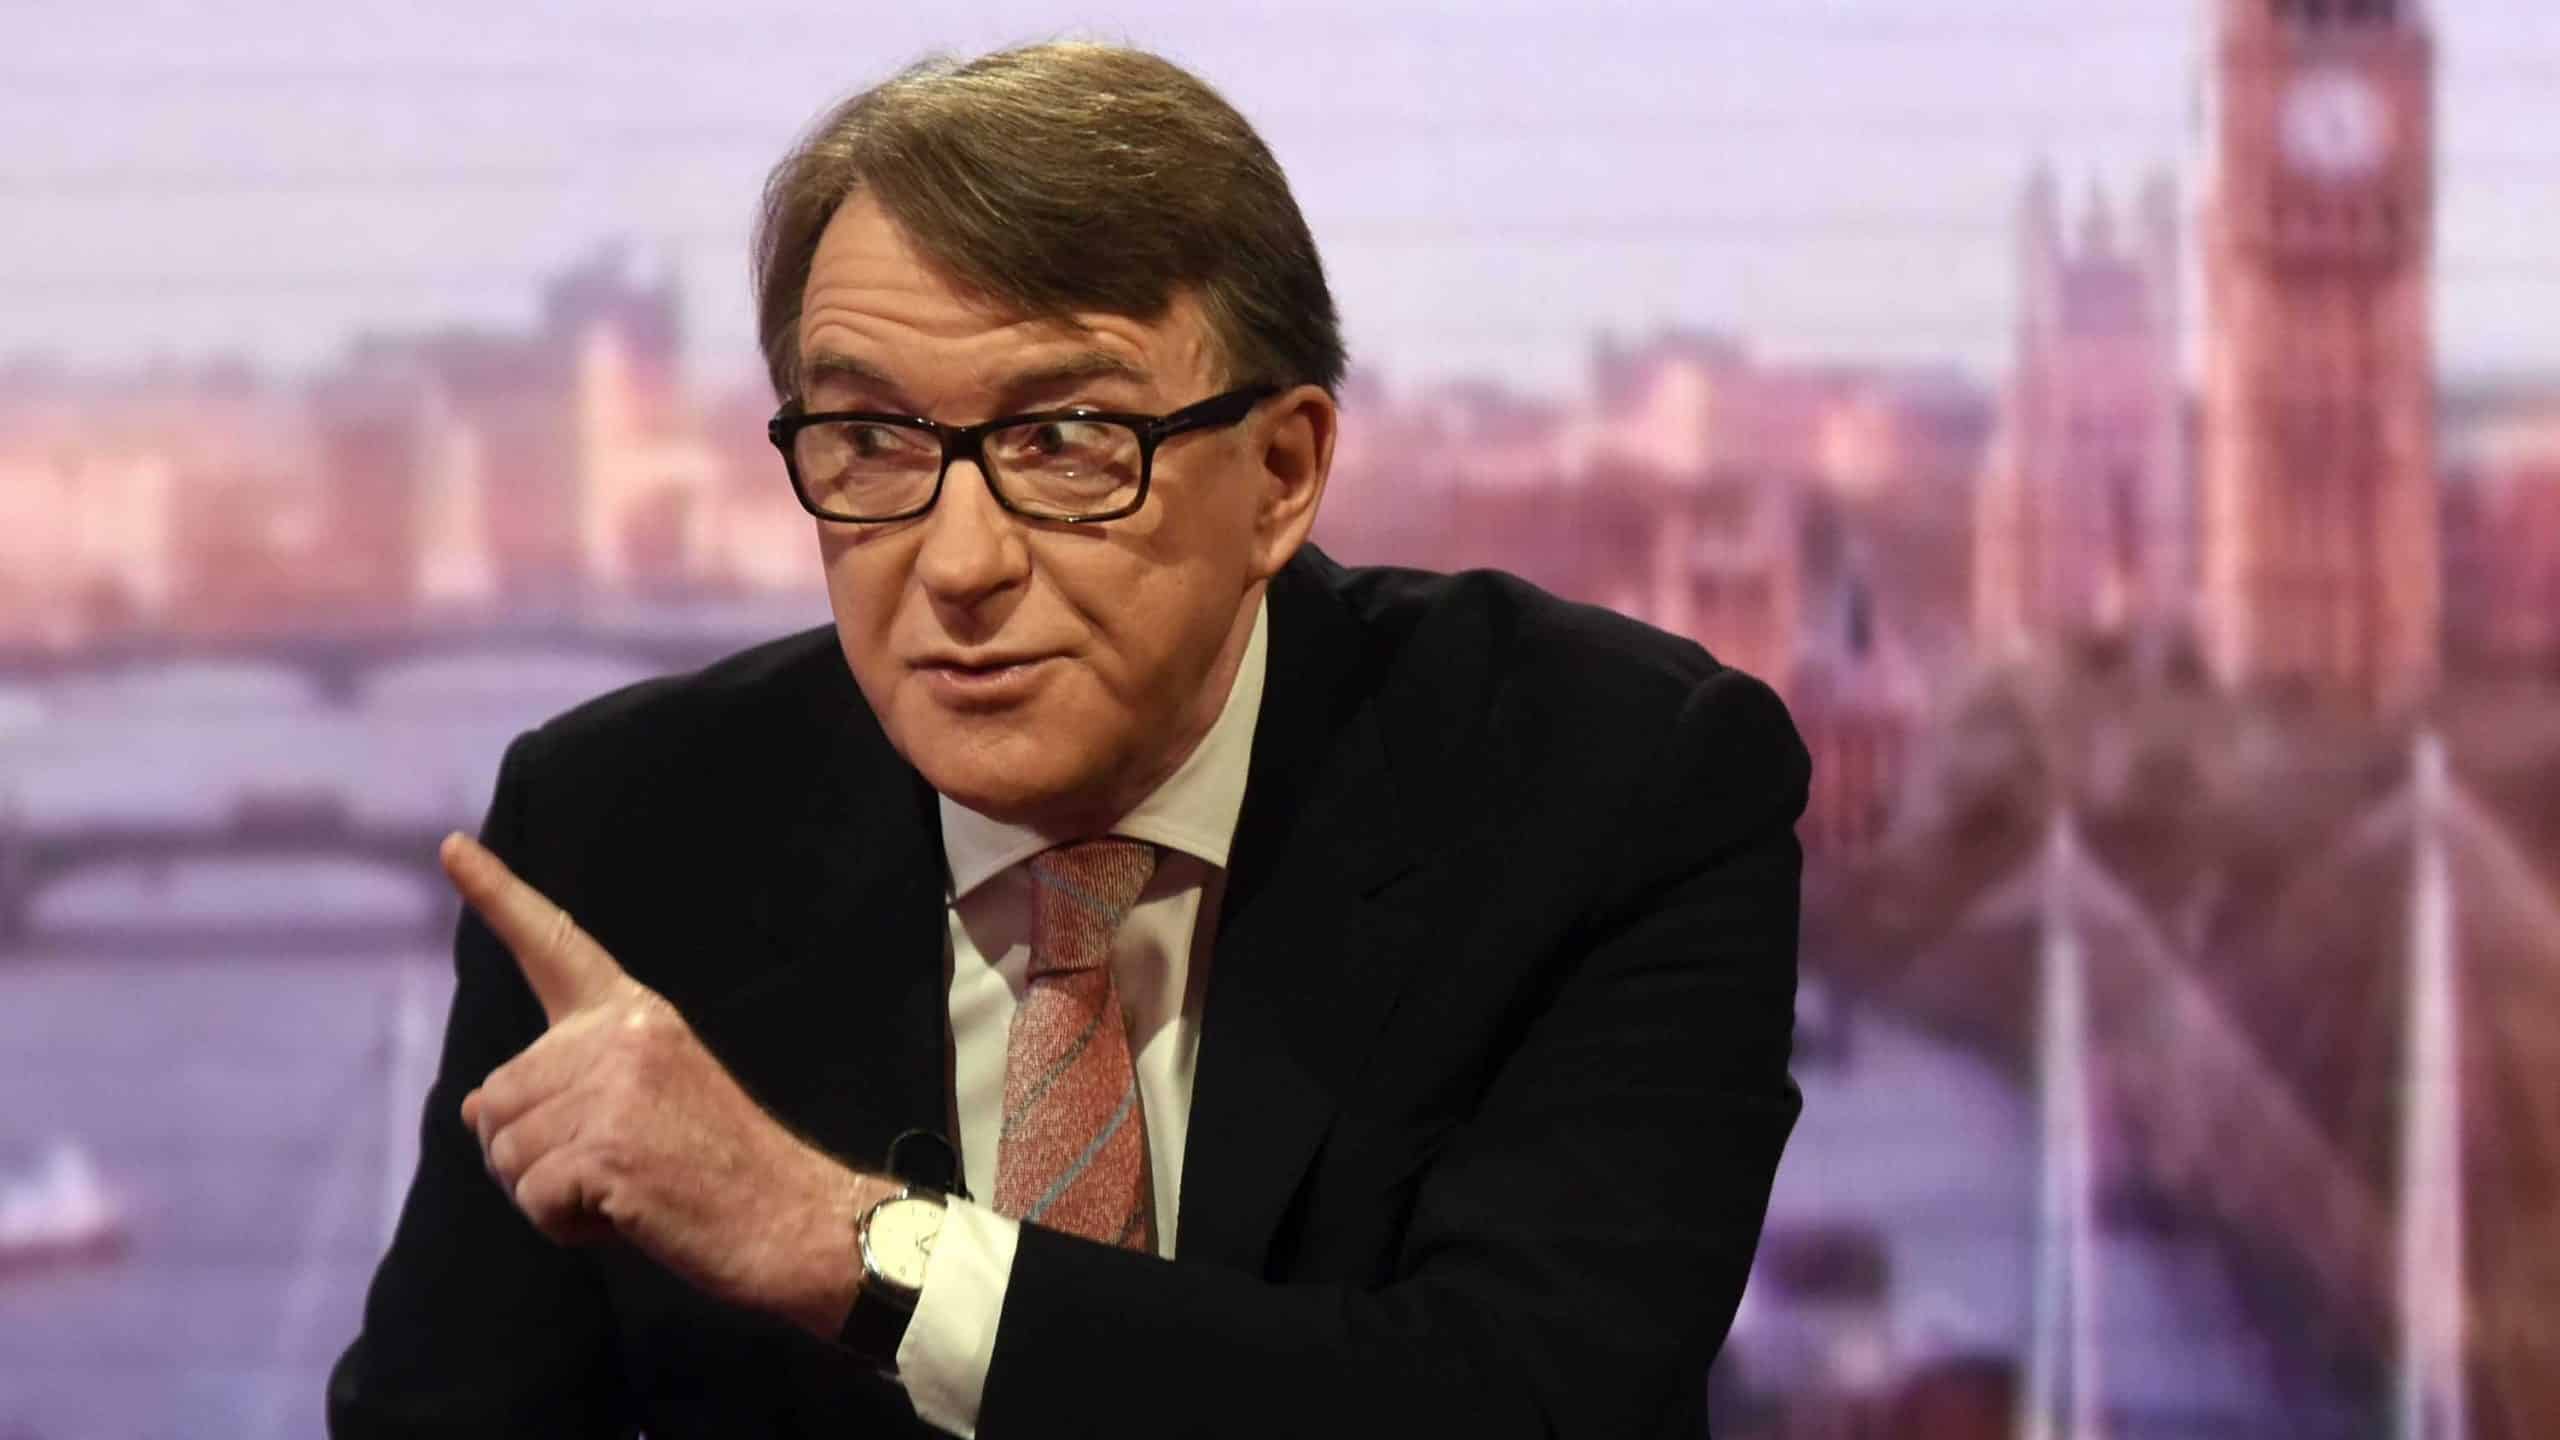 Keir Starmer’s bounce-back plan? Send for Lord Mandelson